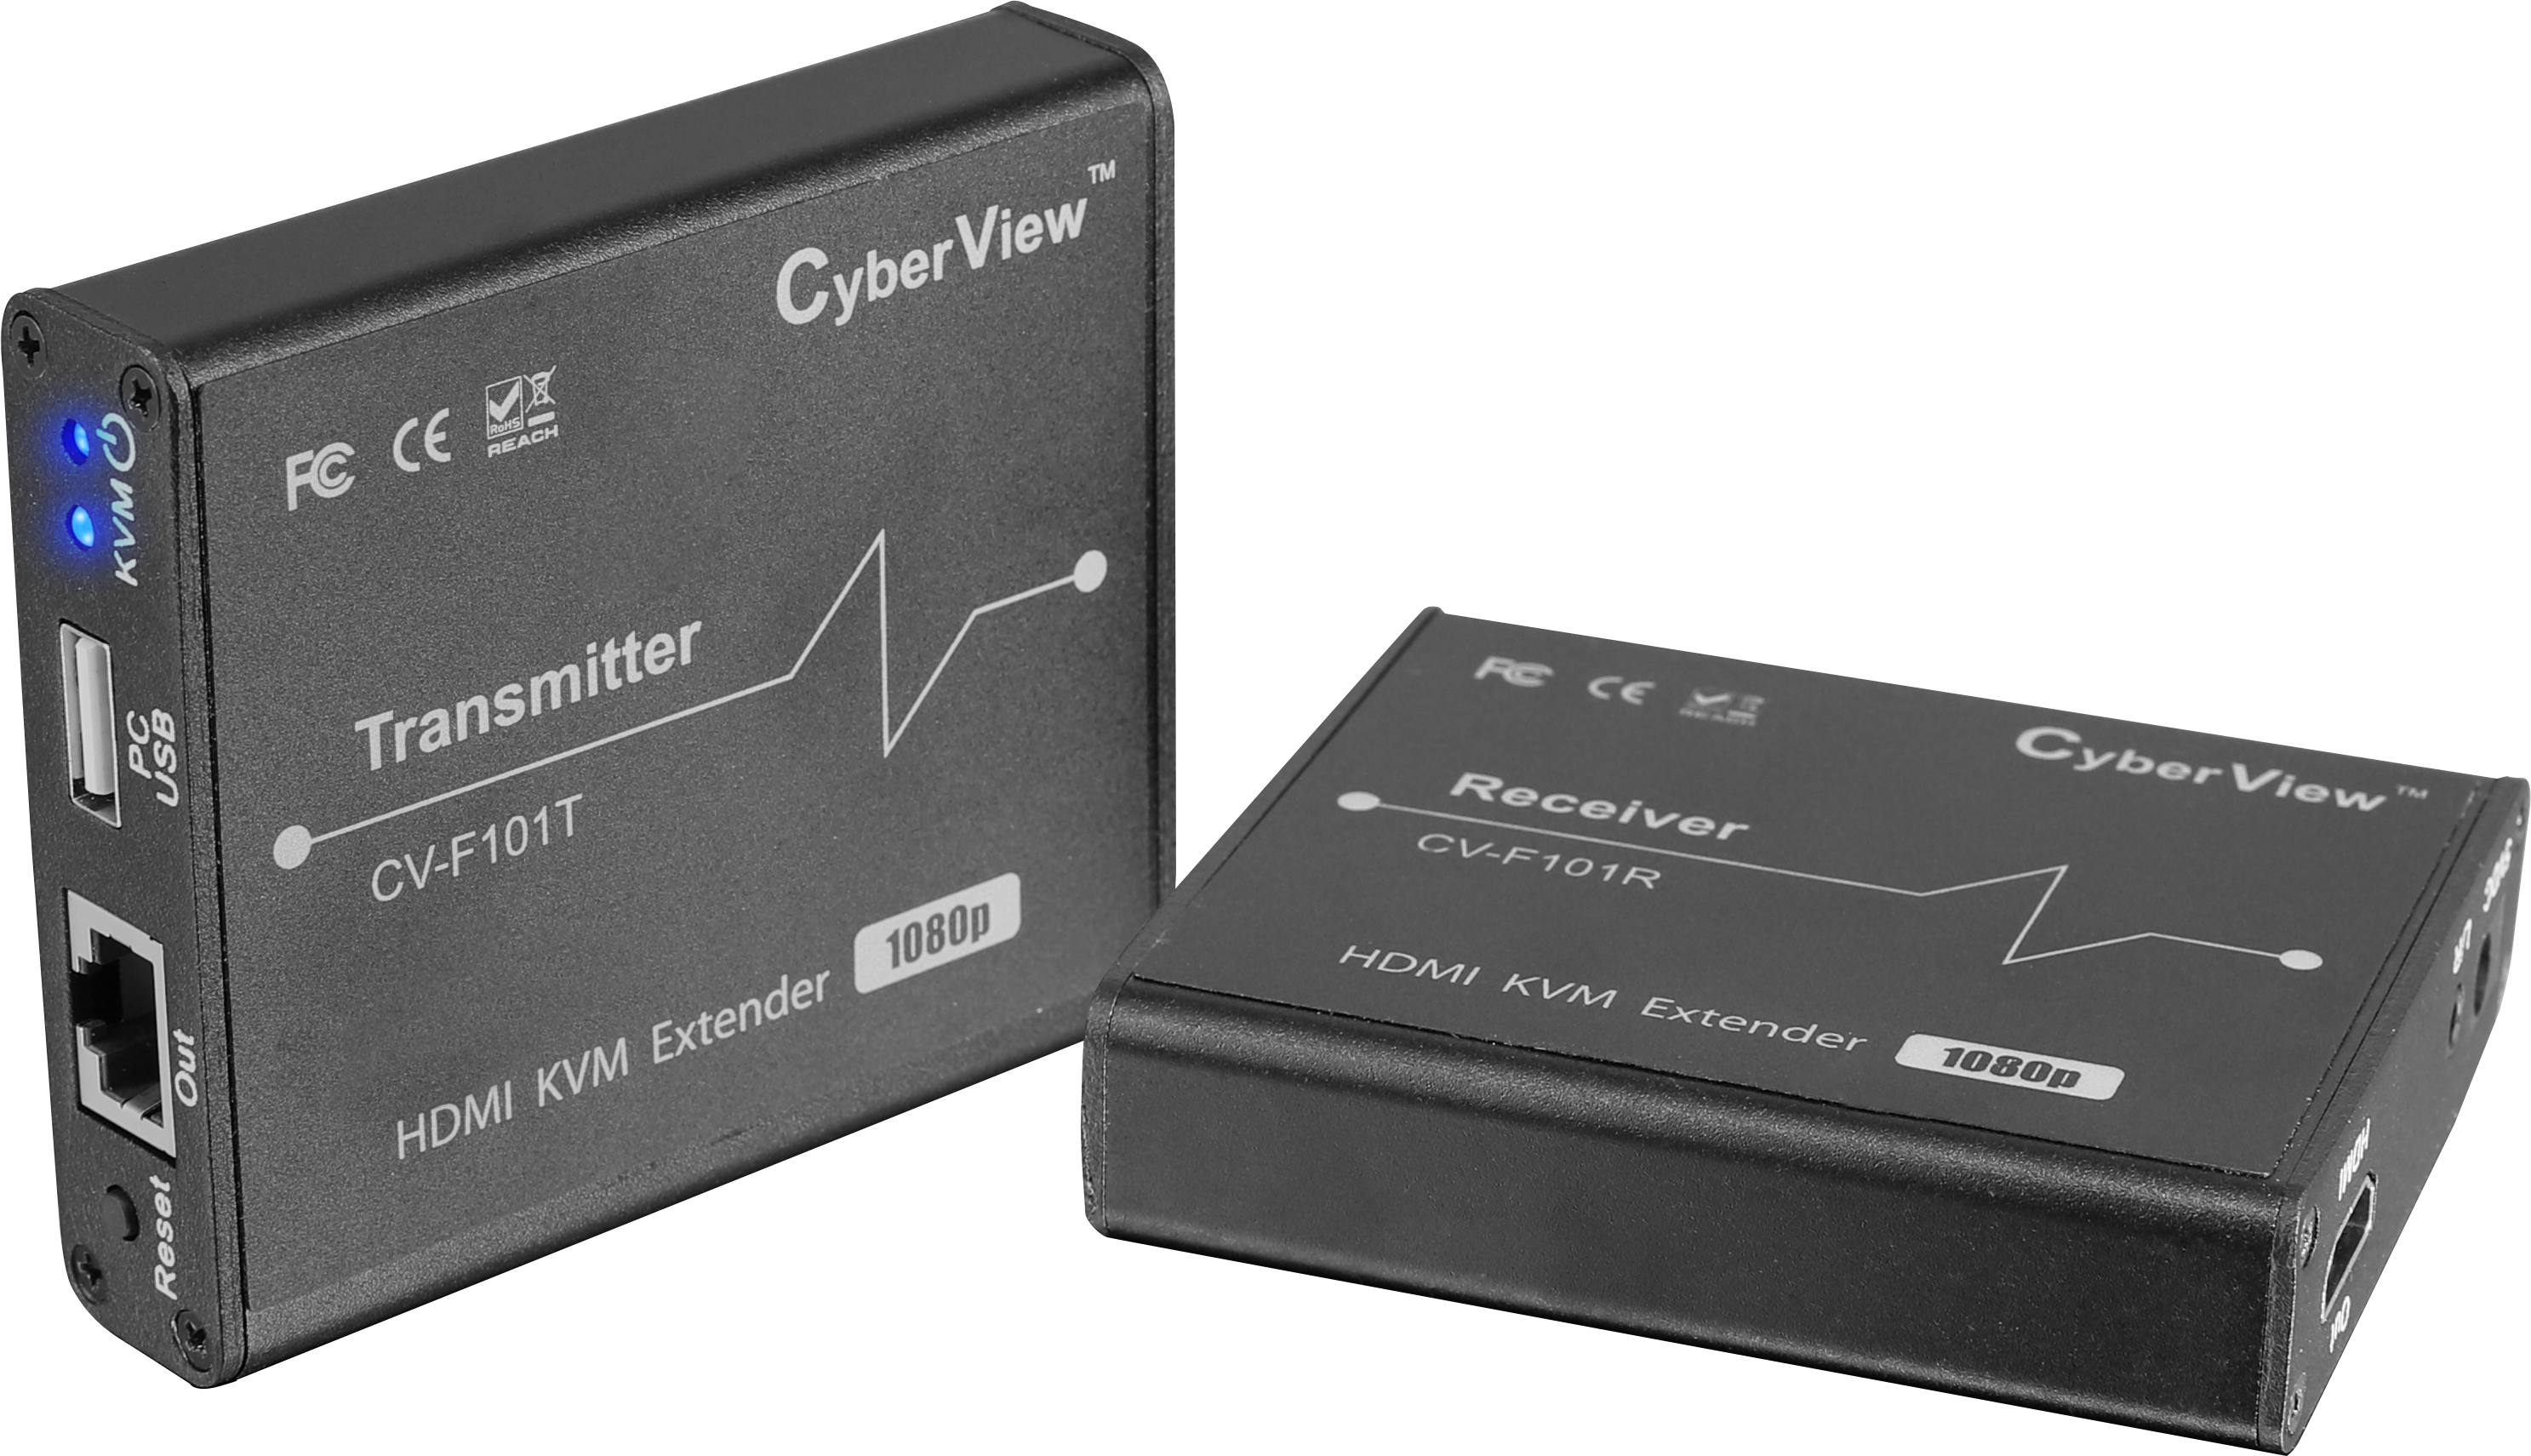 CV-F101 - Cyberview 1080p HDMI KVM Extender